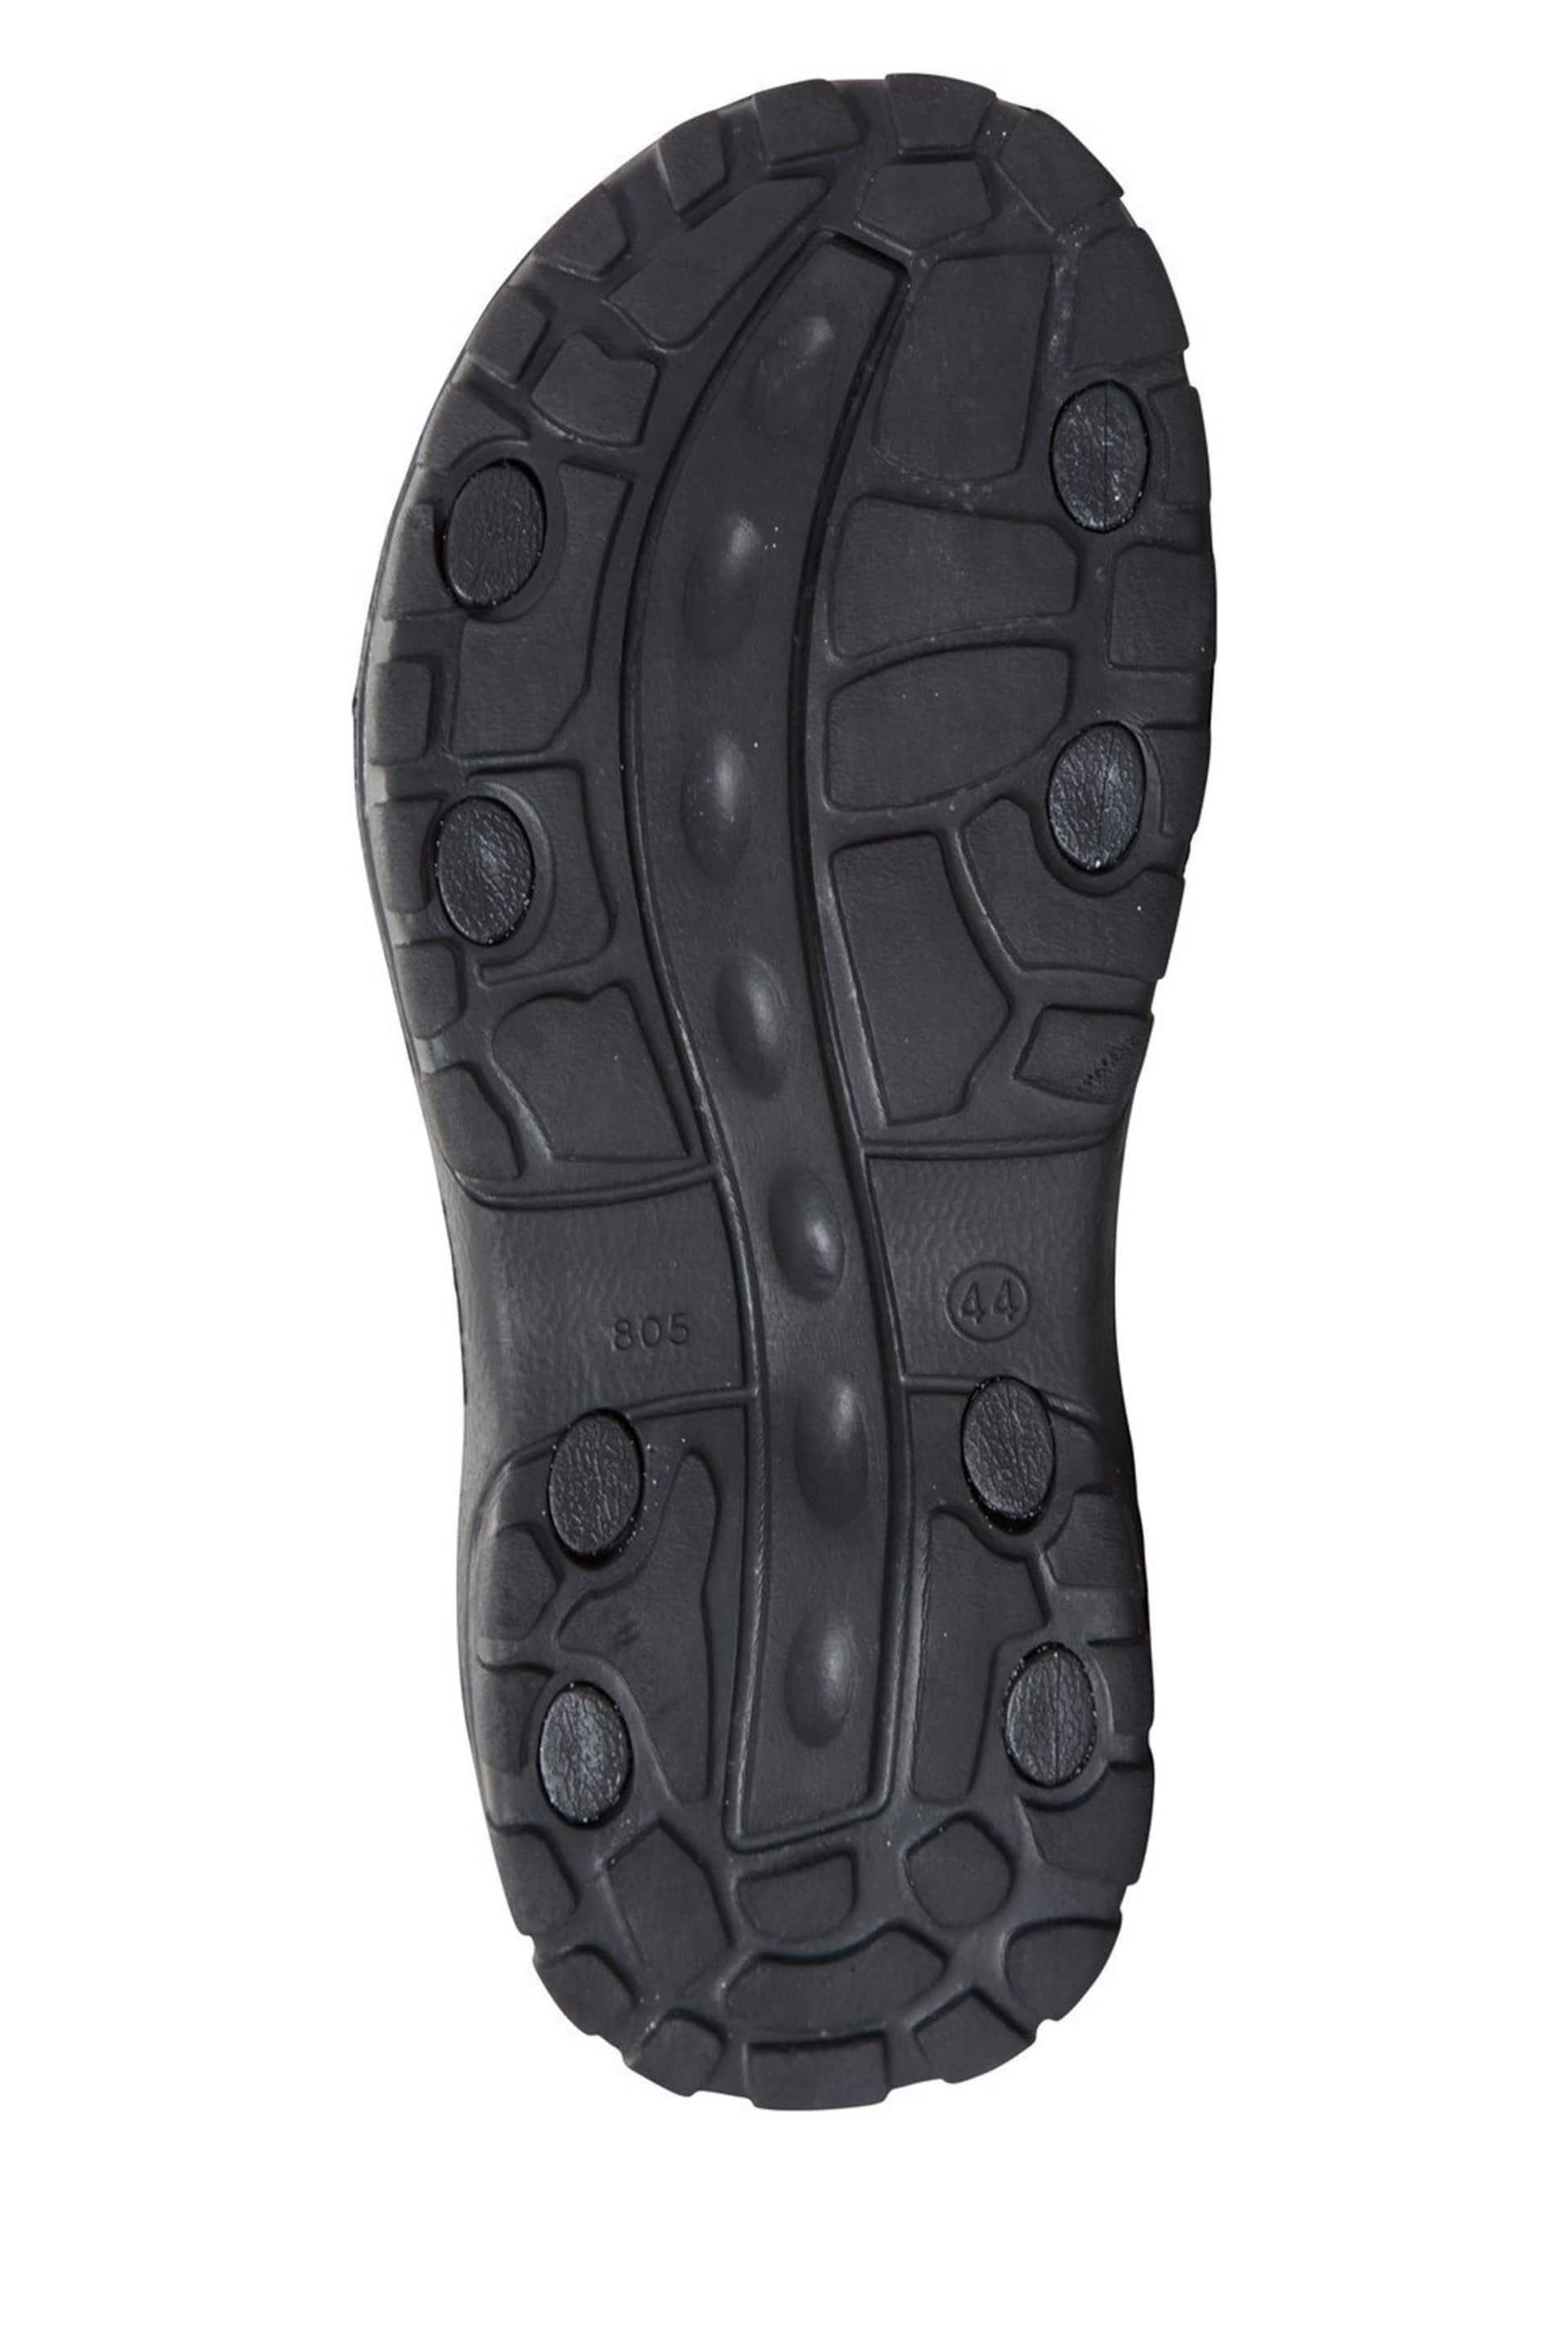 Mountain Warehouse Grey Crete Mens Sandals - Image 3 of 4